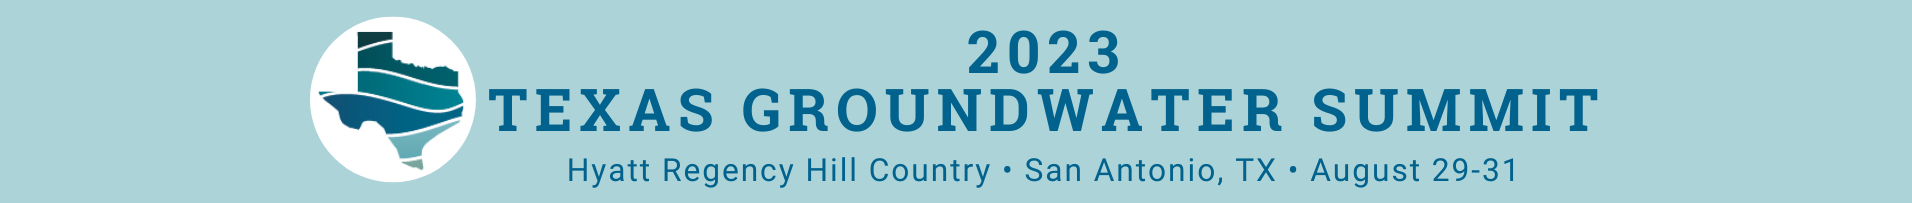 2023 Texas Groundwater Summit banner